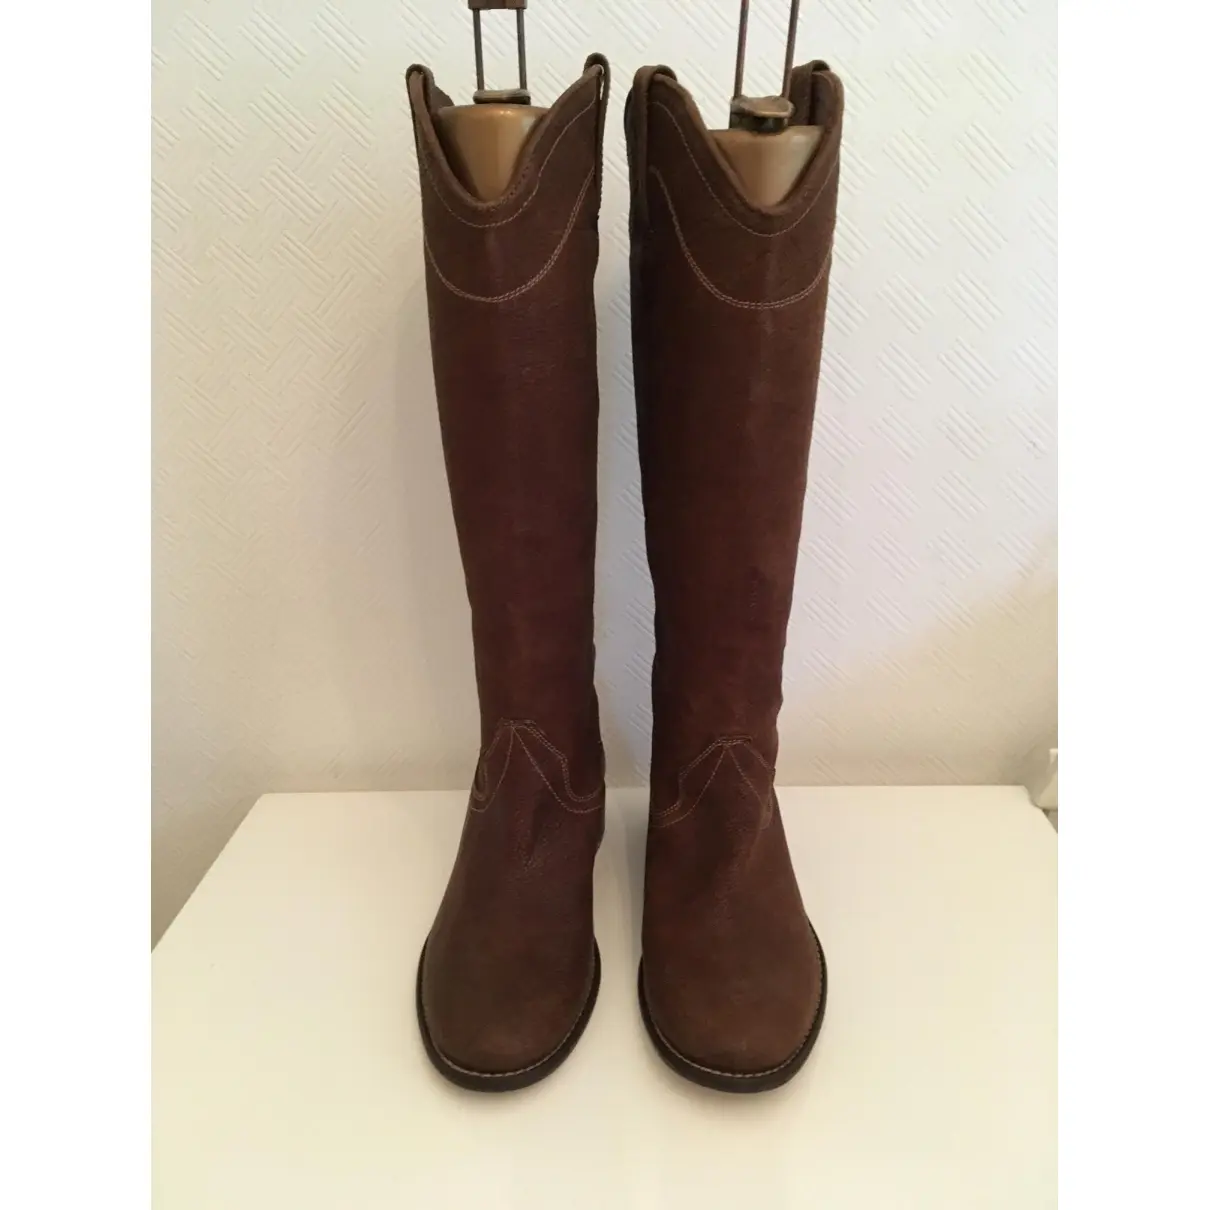 Buy Tatoosh Leather boots online